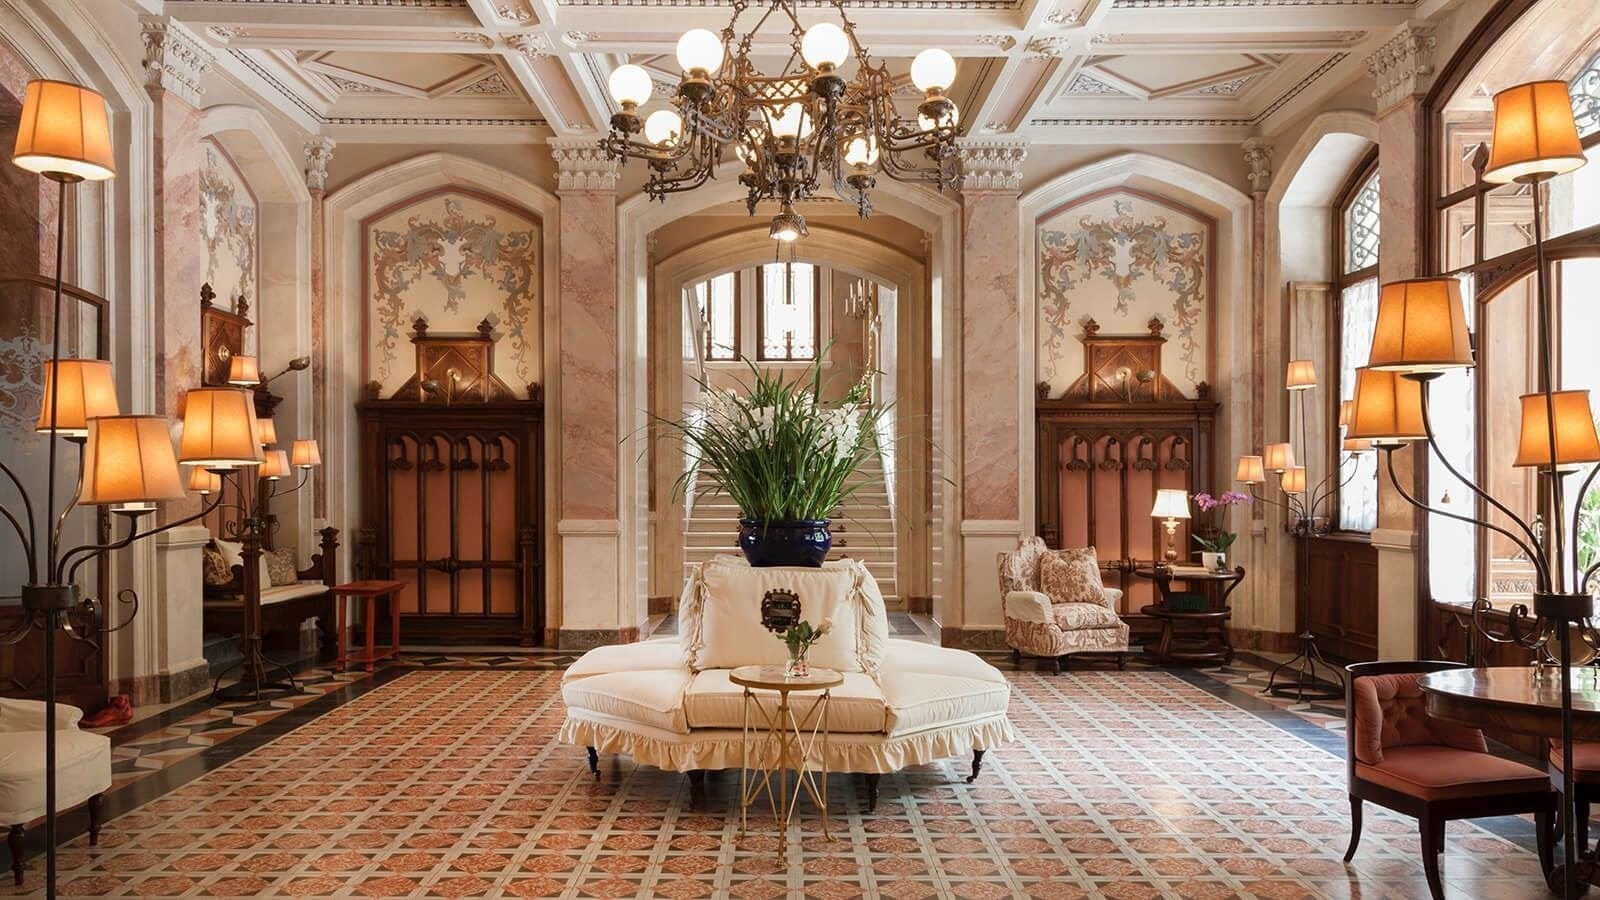 0000225-grand-hotel-a-villa-feltrinelli-the-magnificent-hall.jpeg